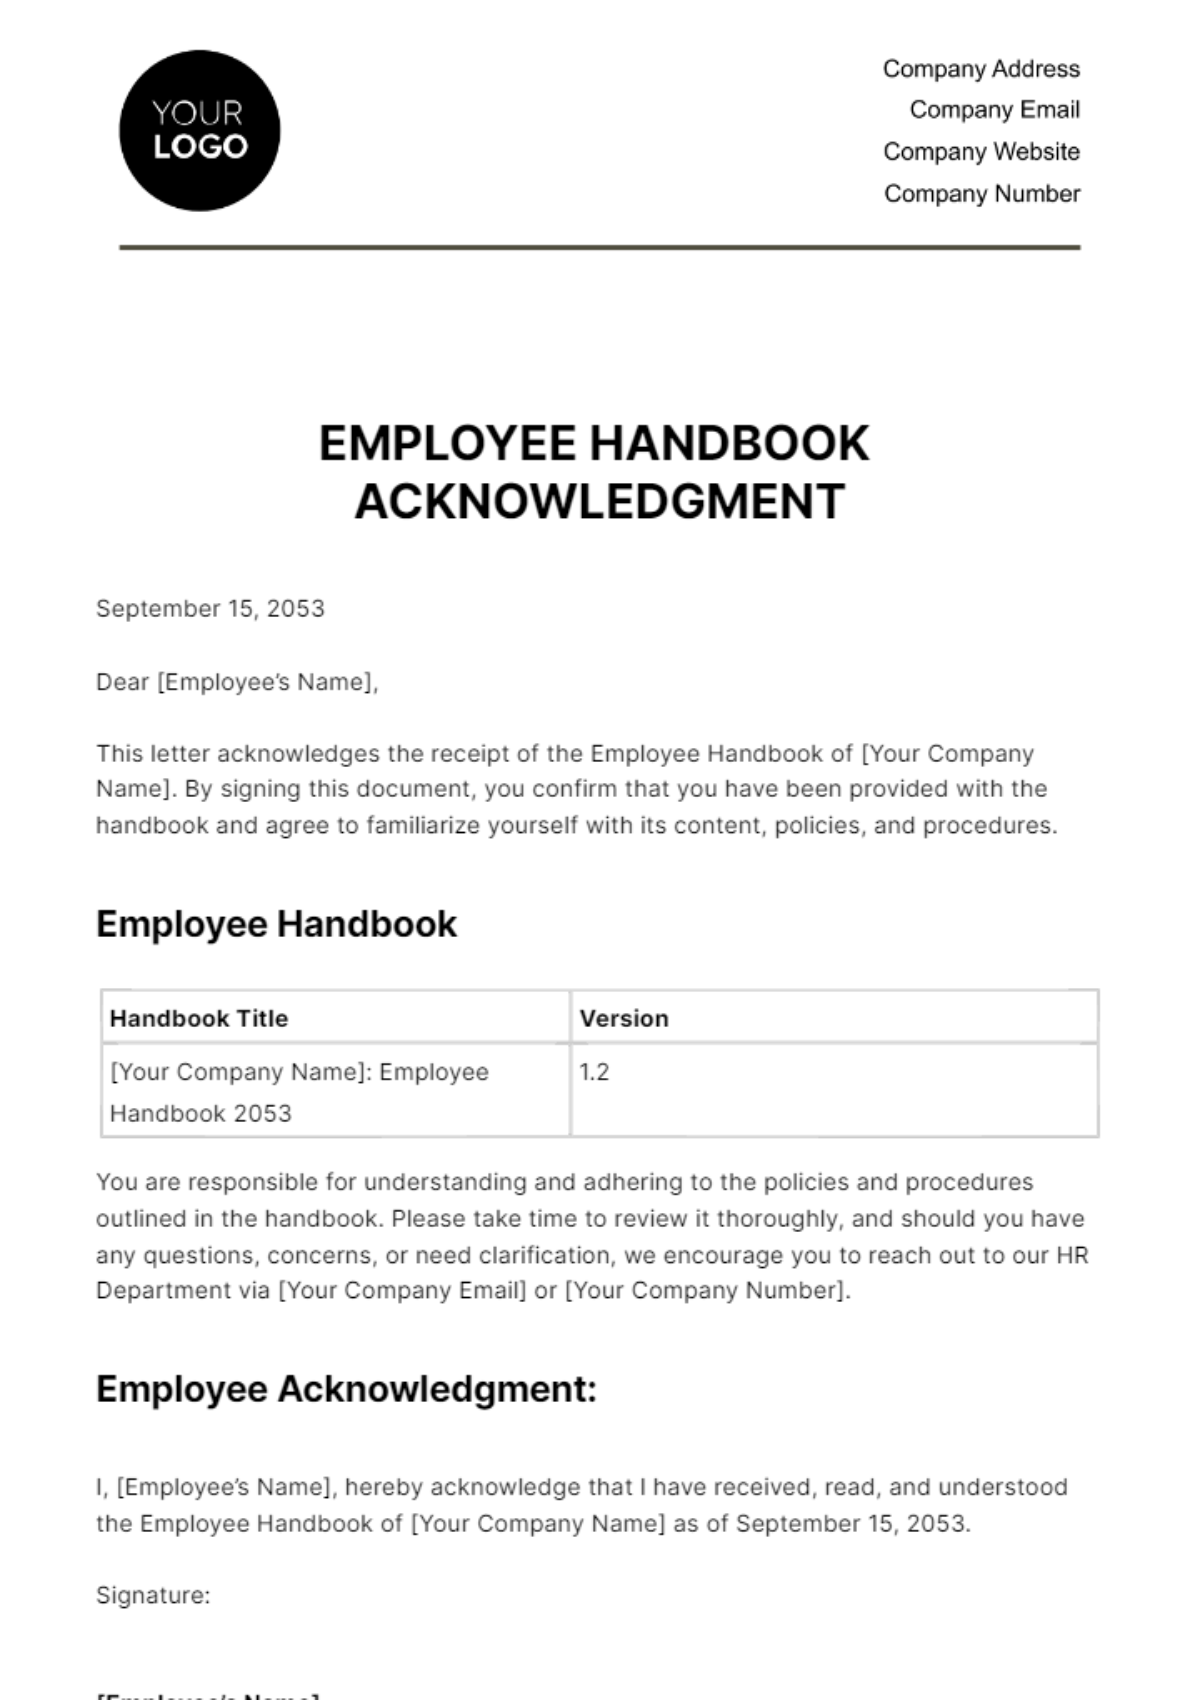 Free Employee Handbook Acknowledgment HR Template